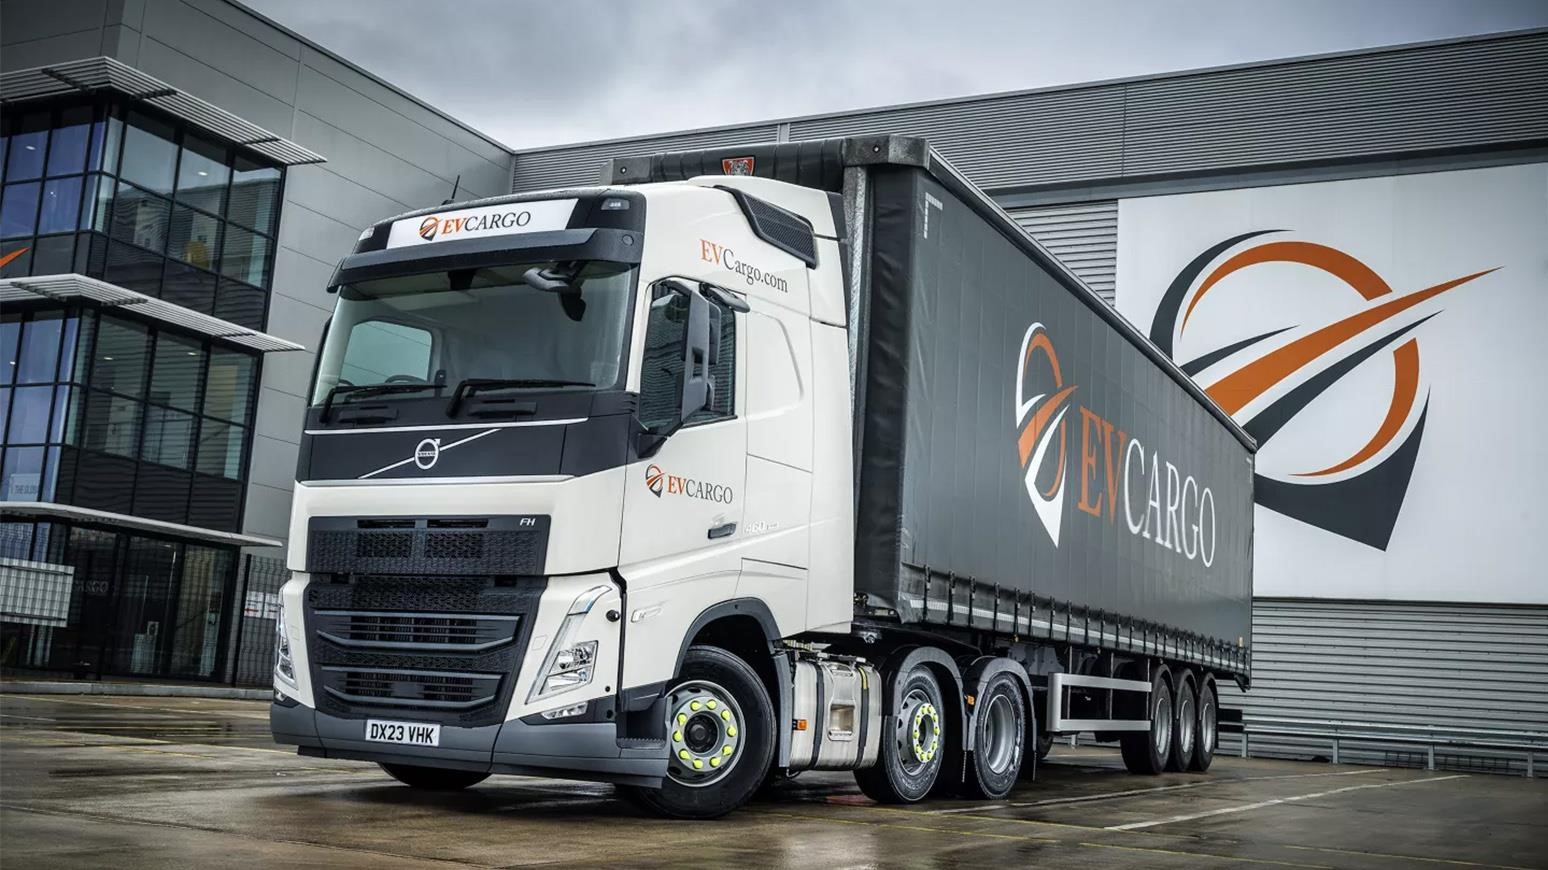 10 Volvo FH Trucks Power EV Cargo’s Carbon-Neutral Goals